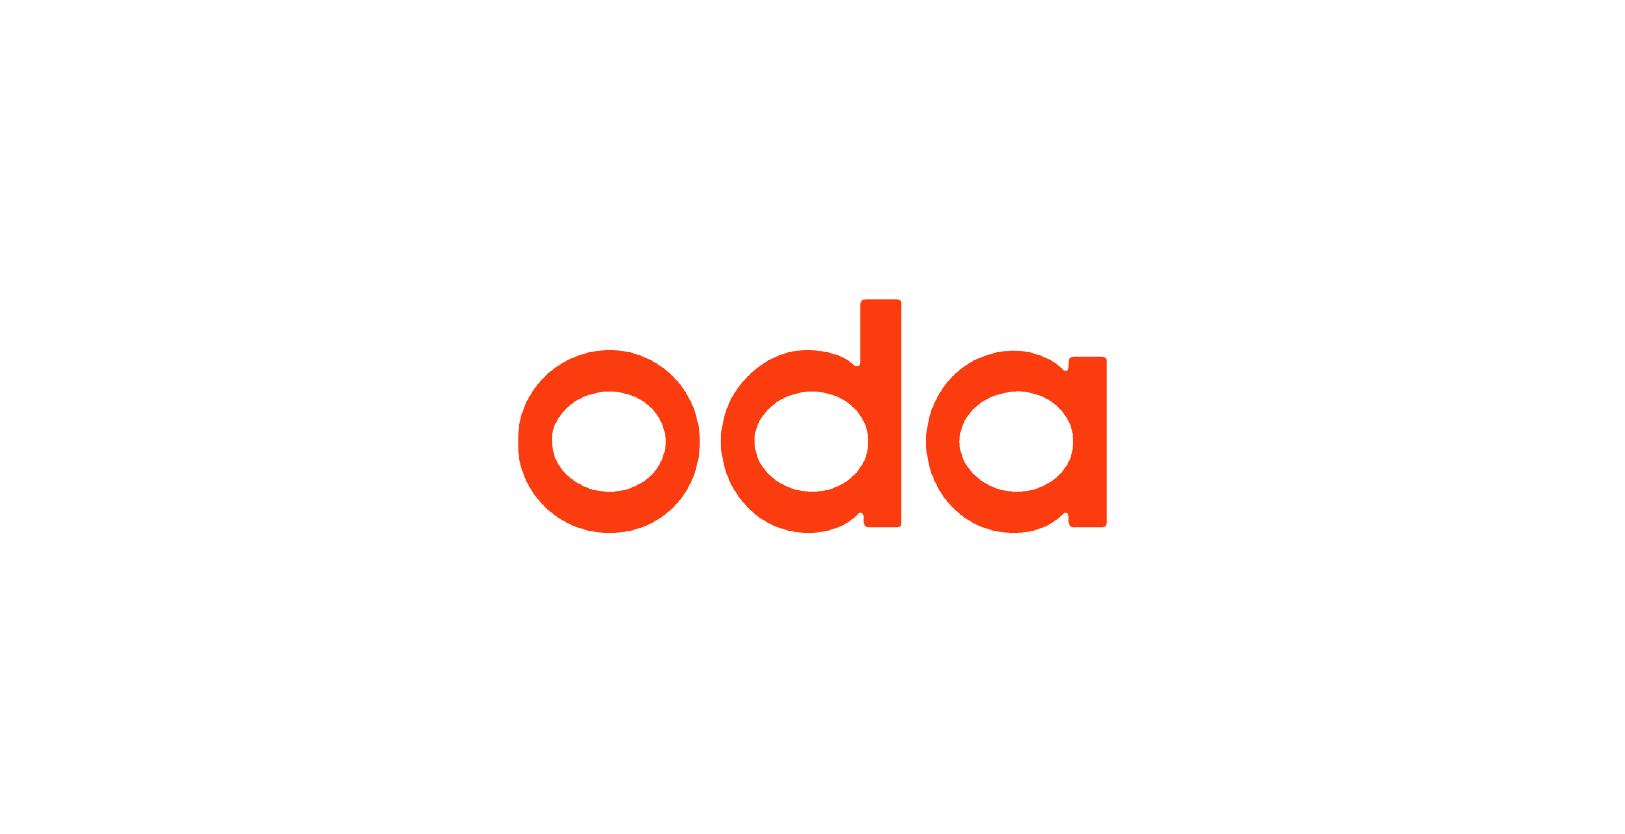 Vision Fund investment portfolio company Oda's logo